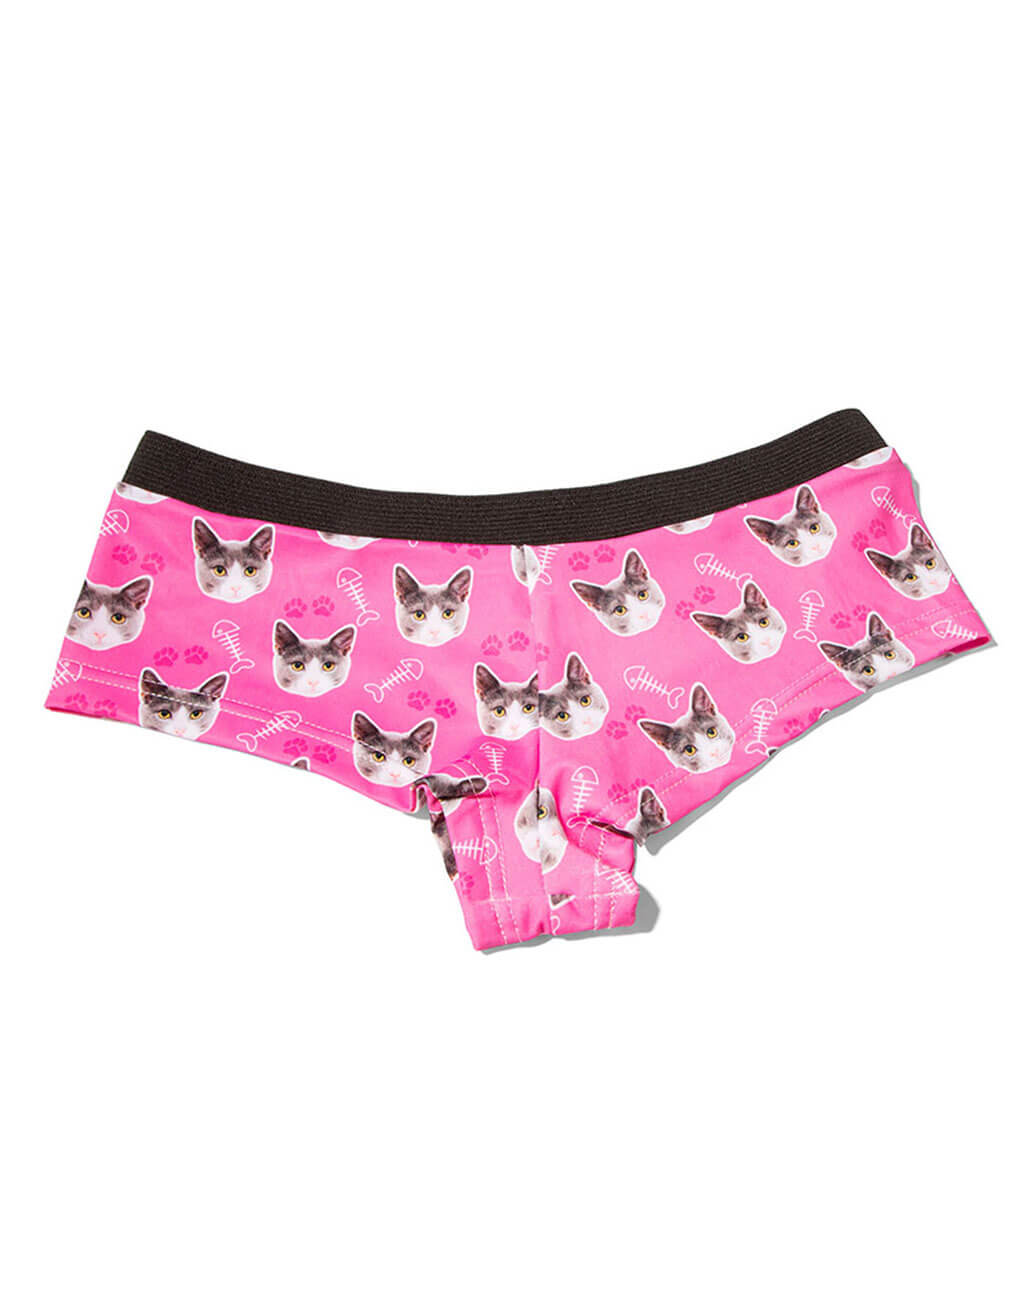 Your Cat Custom Panties